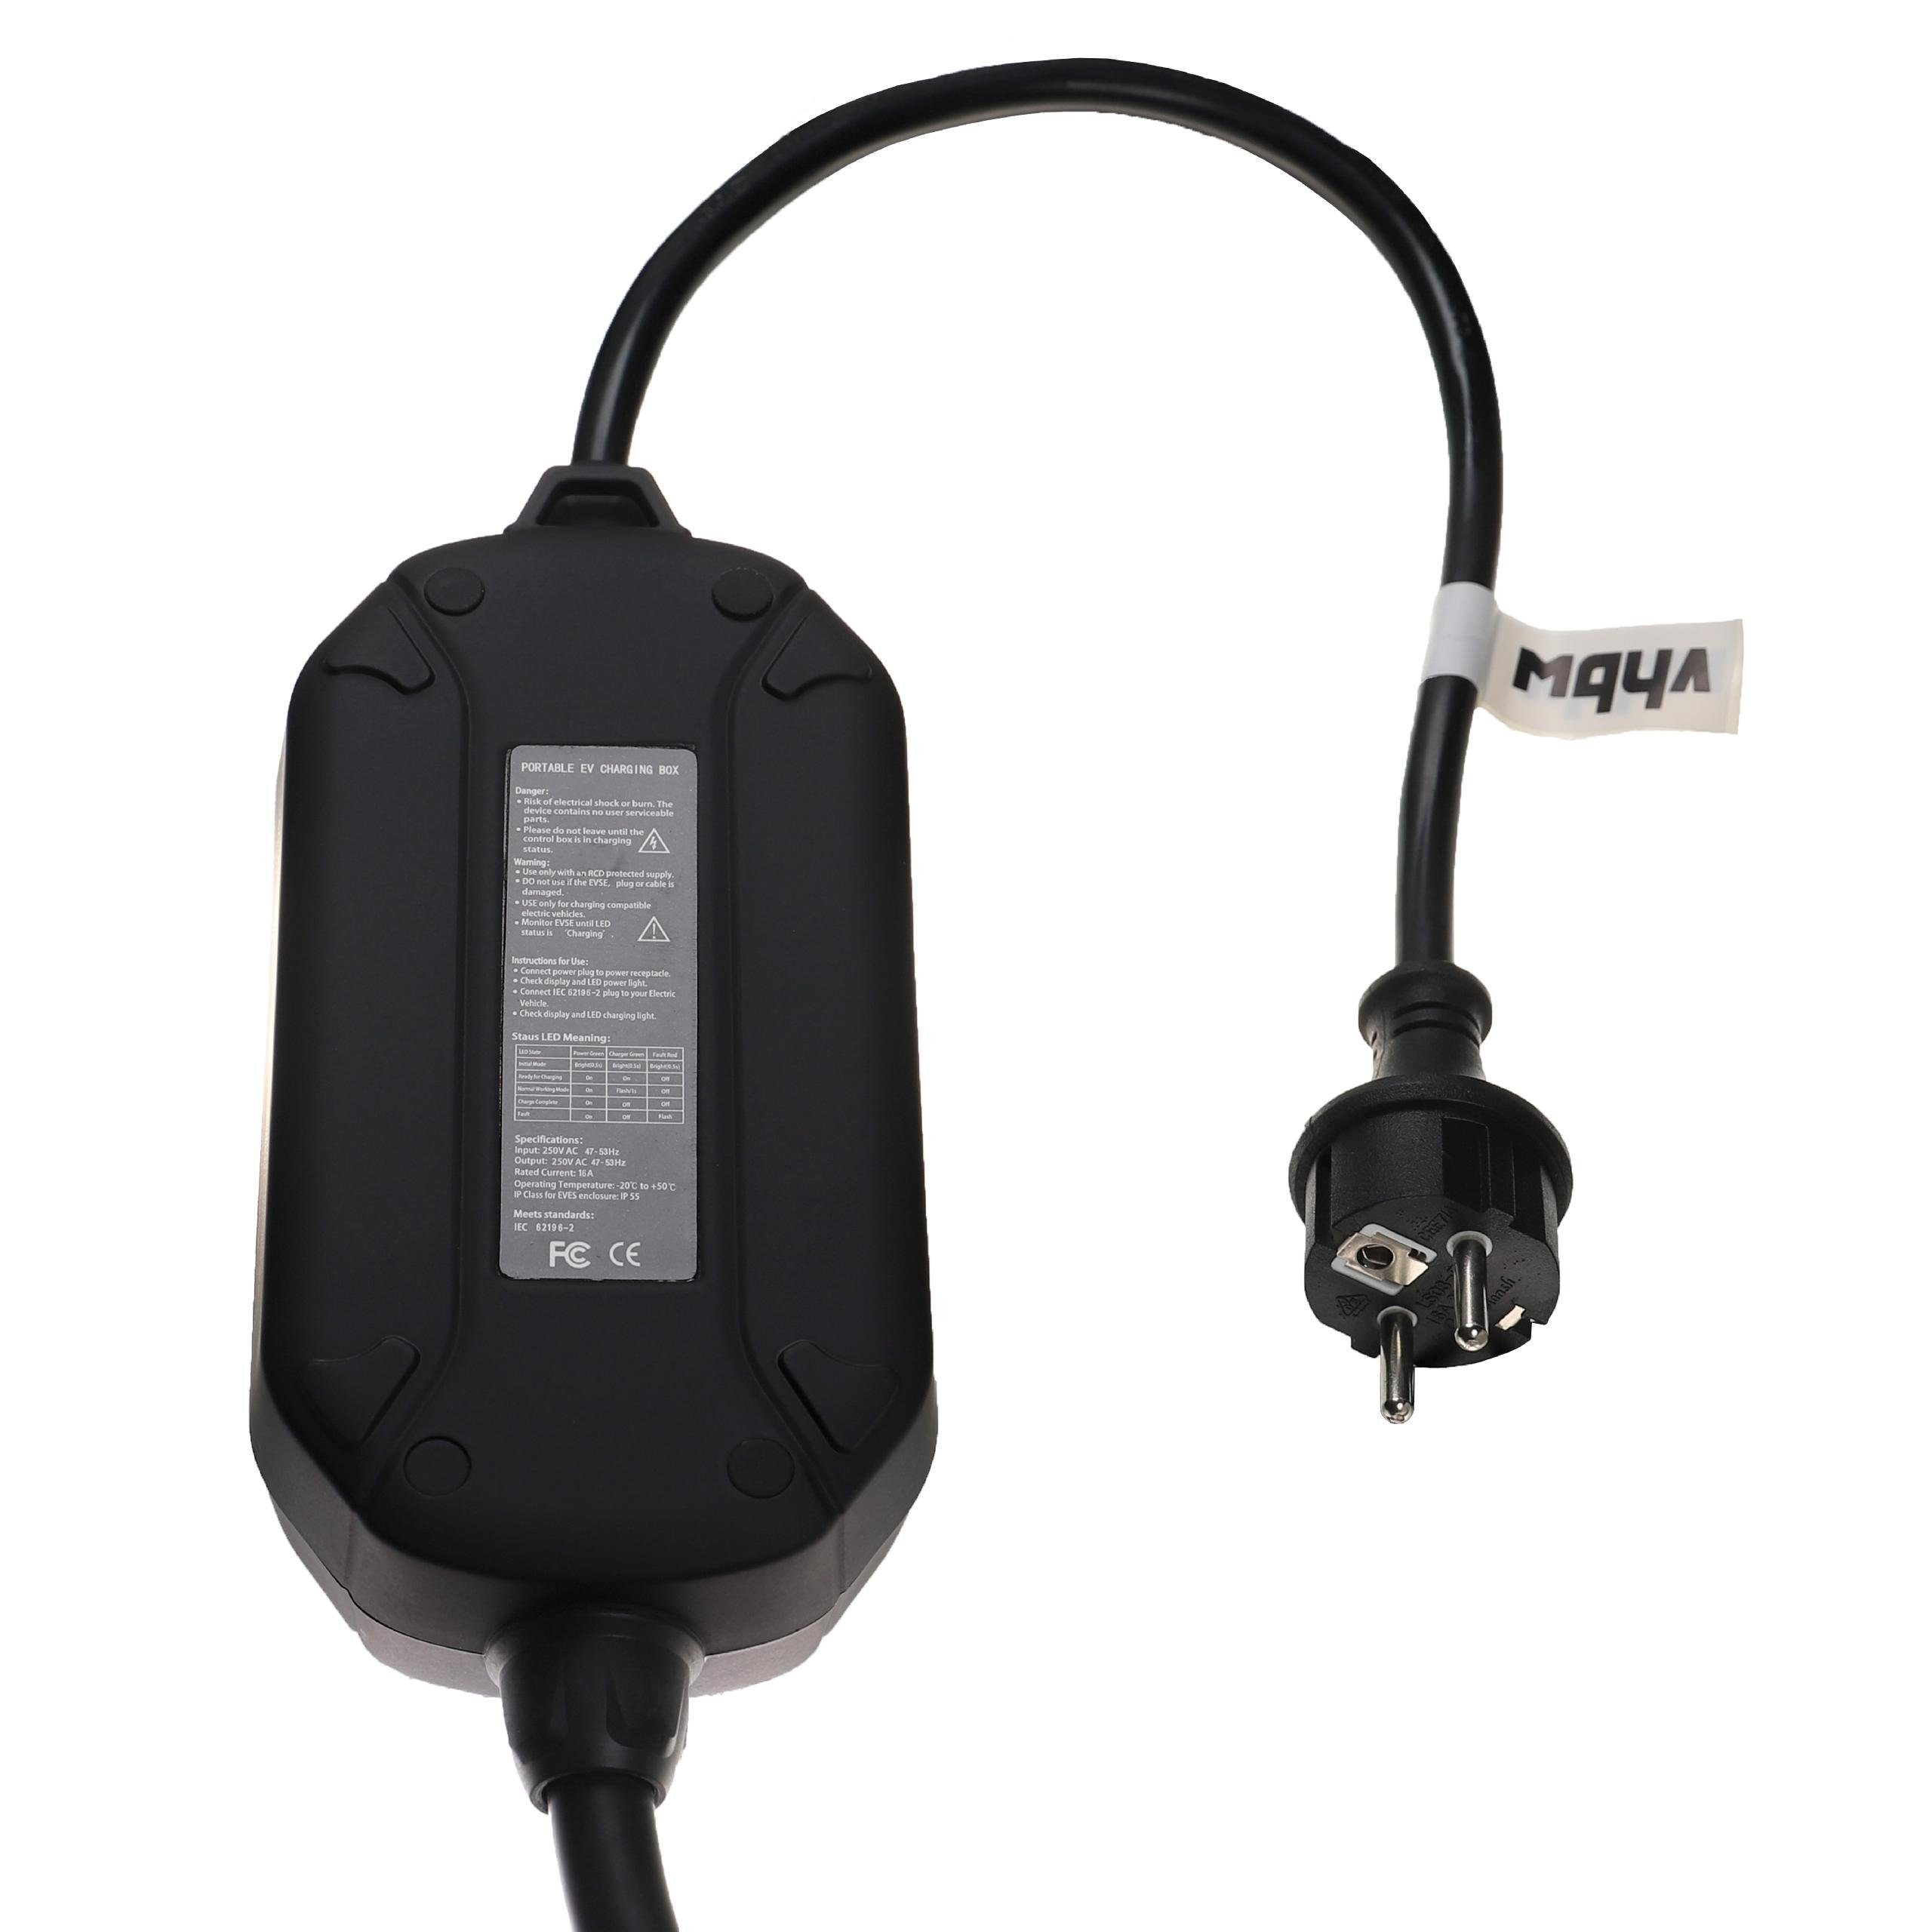 vhbw passend für Dacia / Spring Elektroauto Plug-in-Hybrid Elektro-Kabel